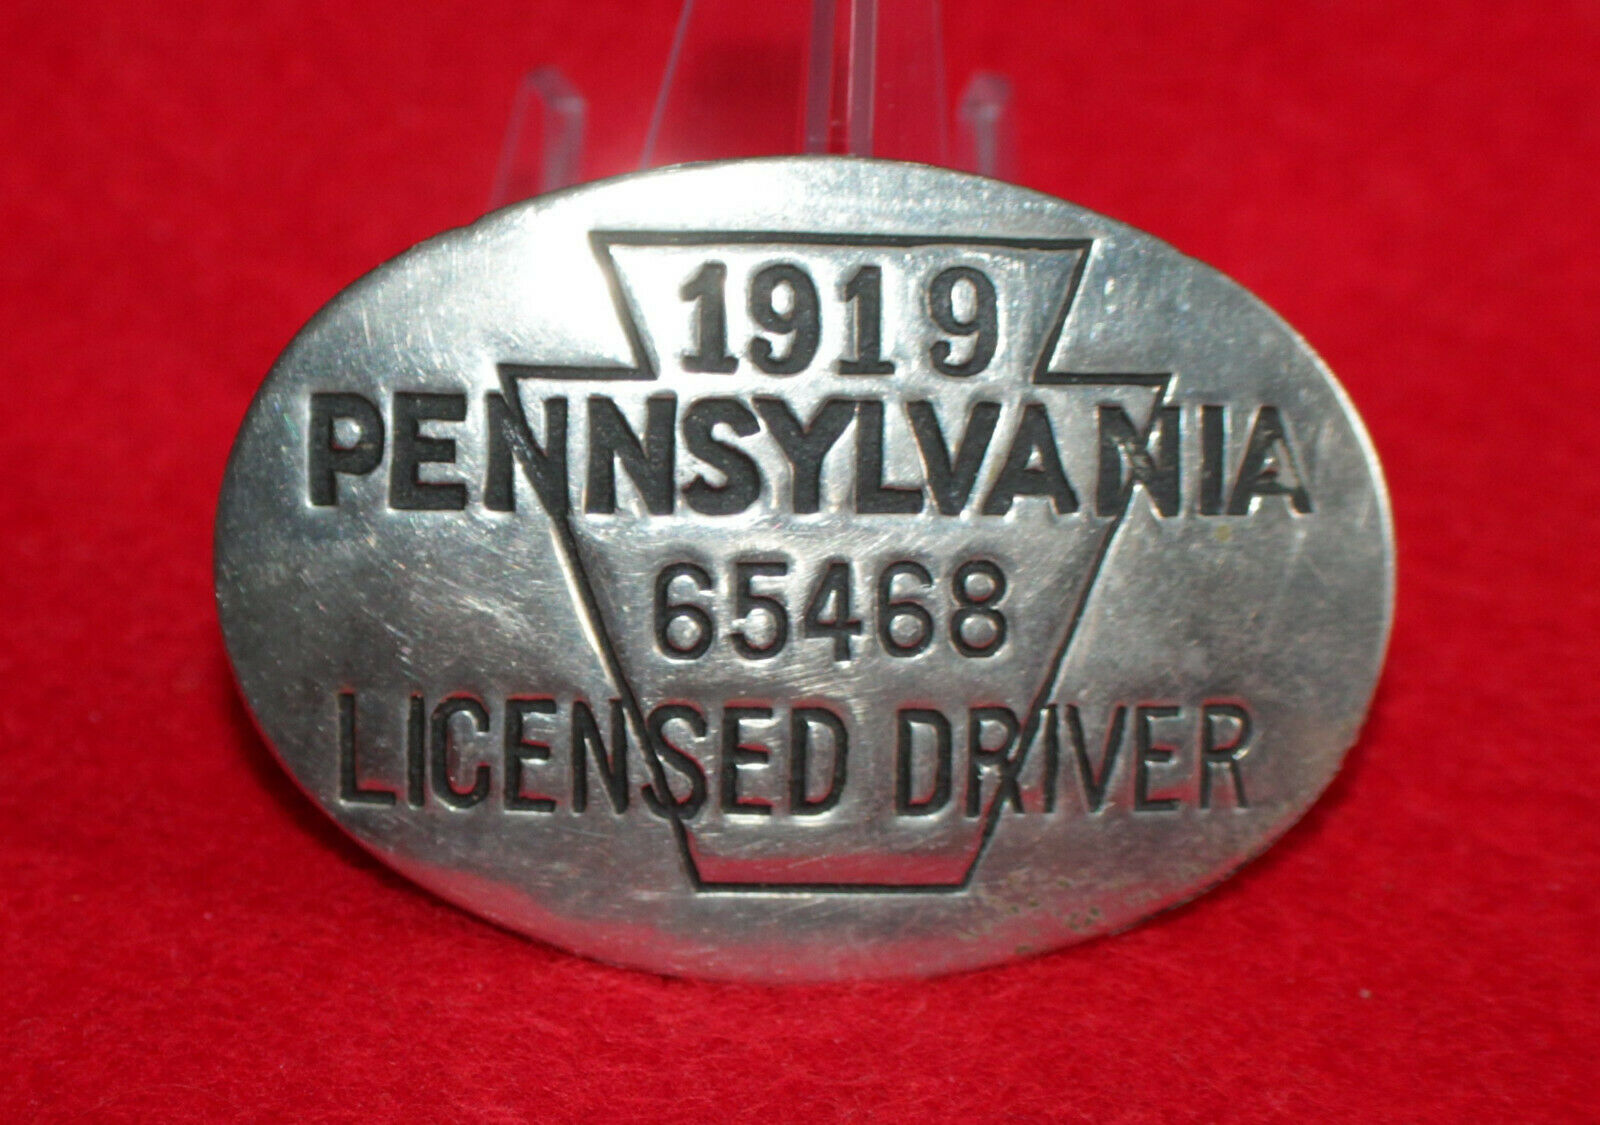 1919 Pennsylvania Licensed Driver Oval Metal Badge